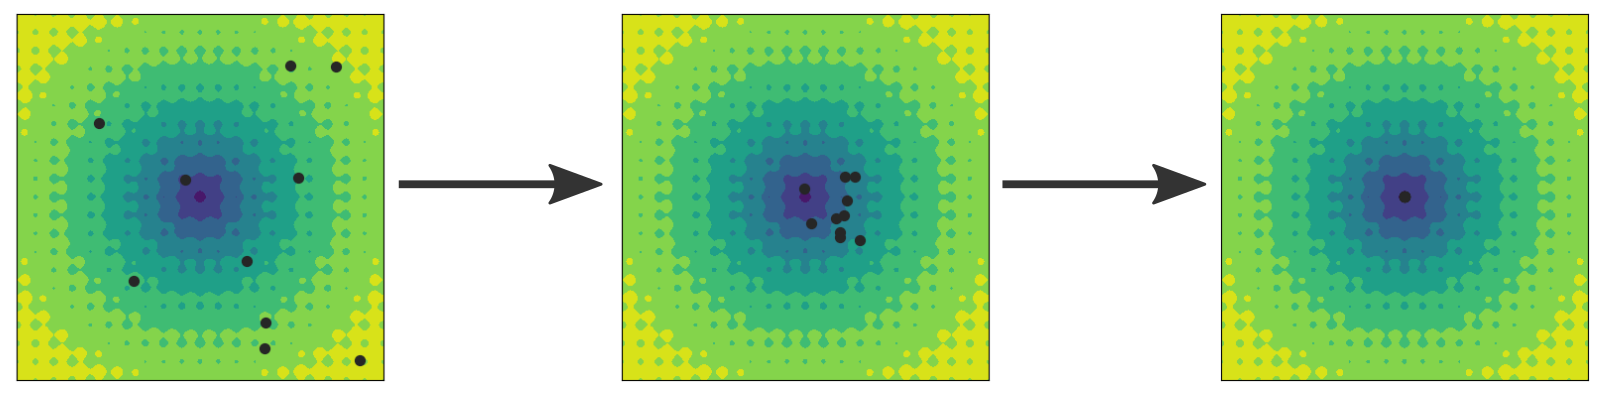 Illustration of particle swarm optimization